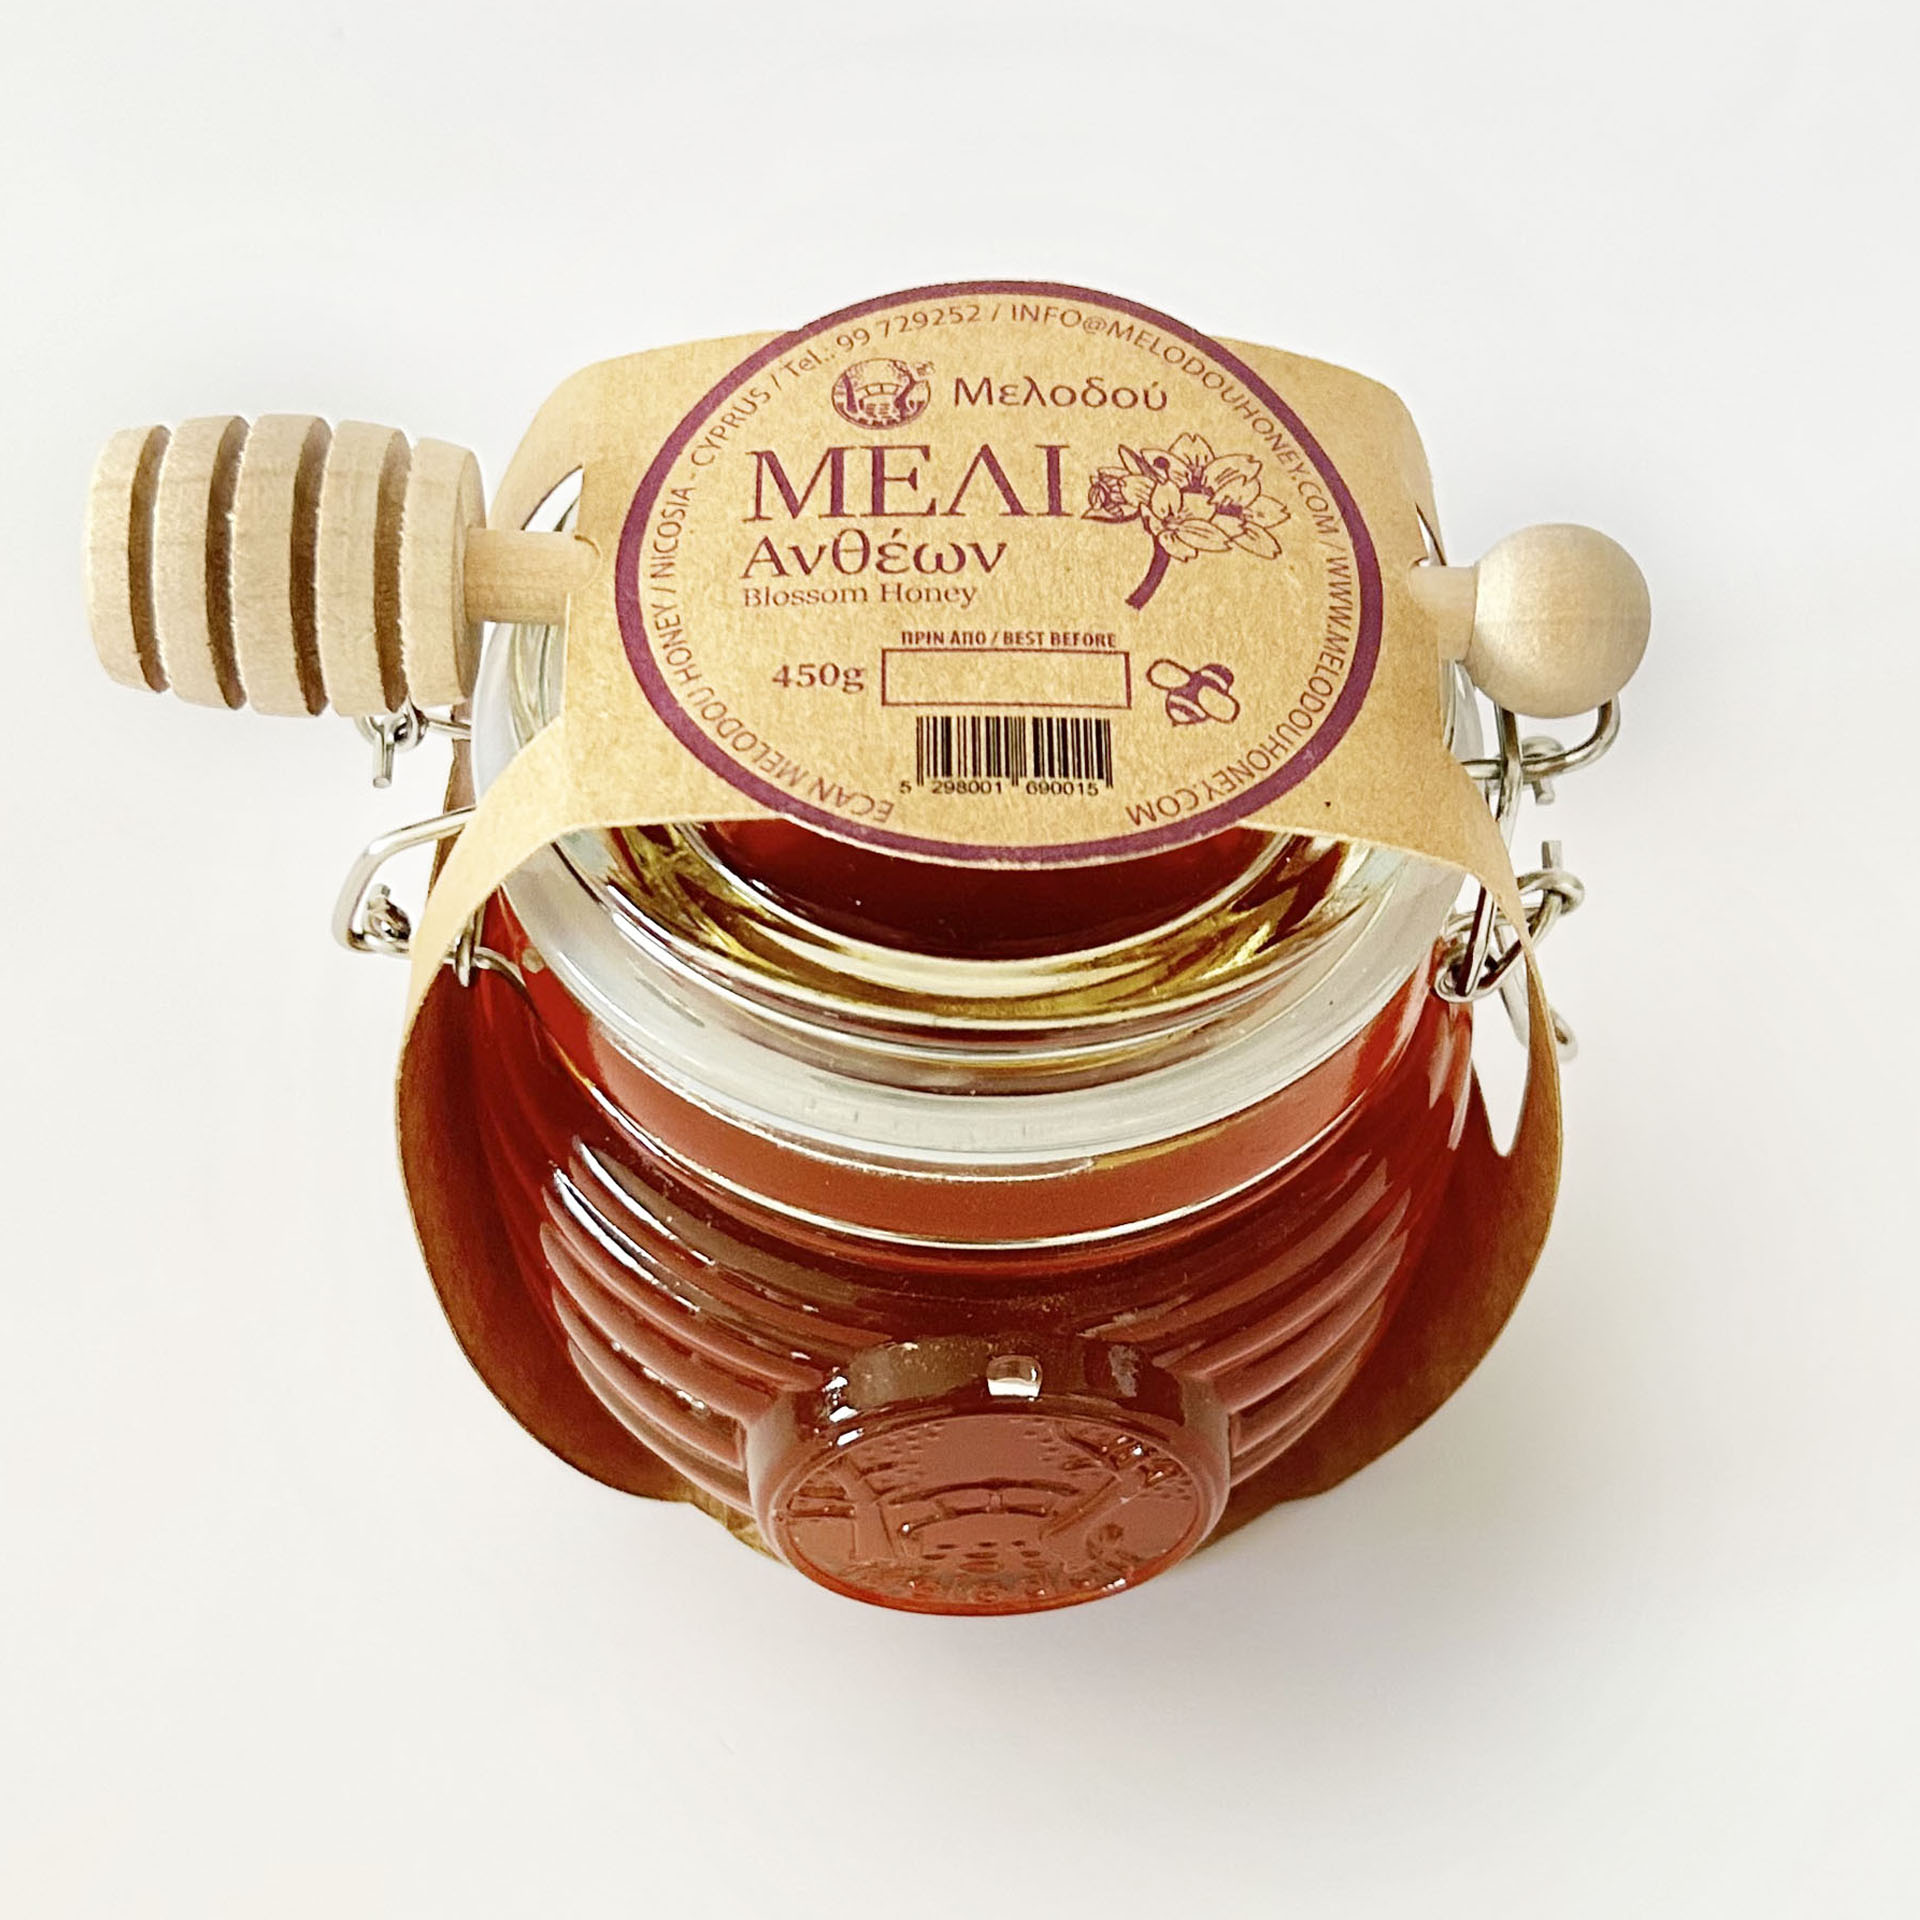 Melodou Blossom Honey 450g Glass Jar with Wooden Honey Dipper